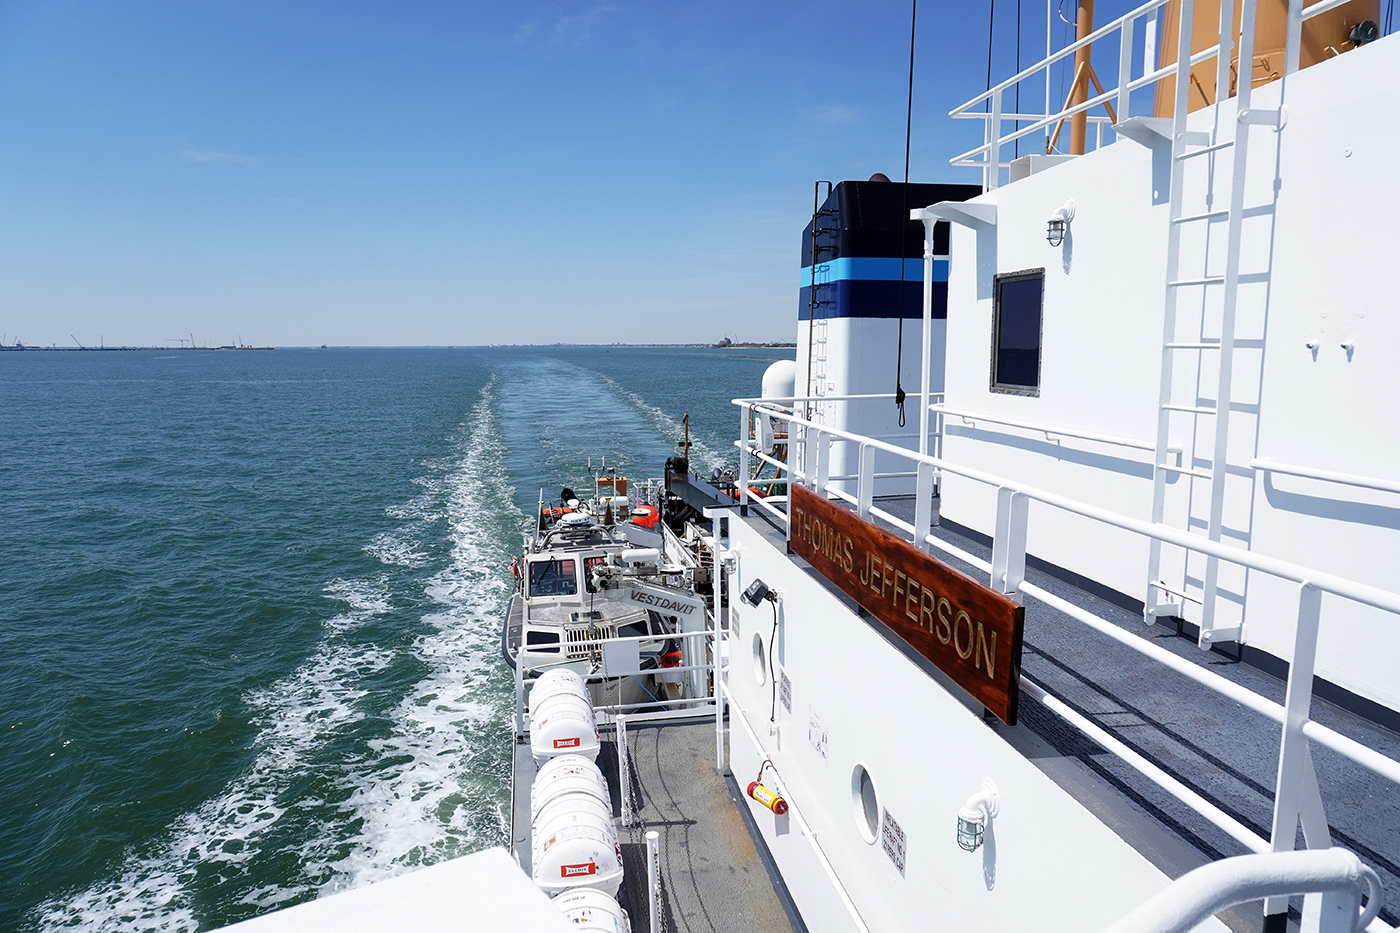 NOAA Ship Thomas Jefferson underway in the Chesapeake Bay performing pre-season testing.